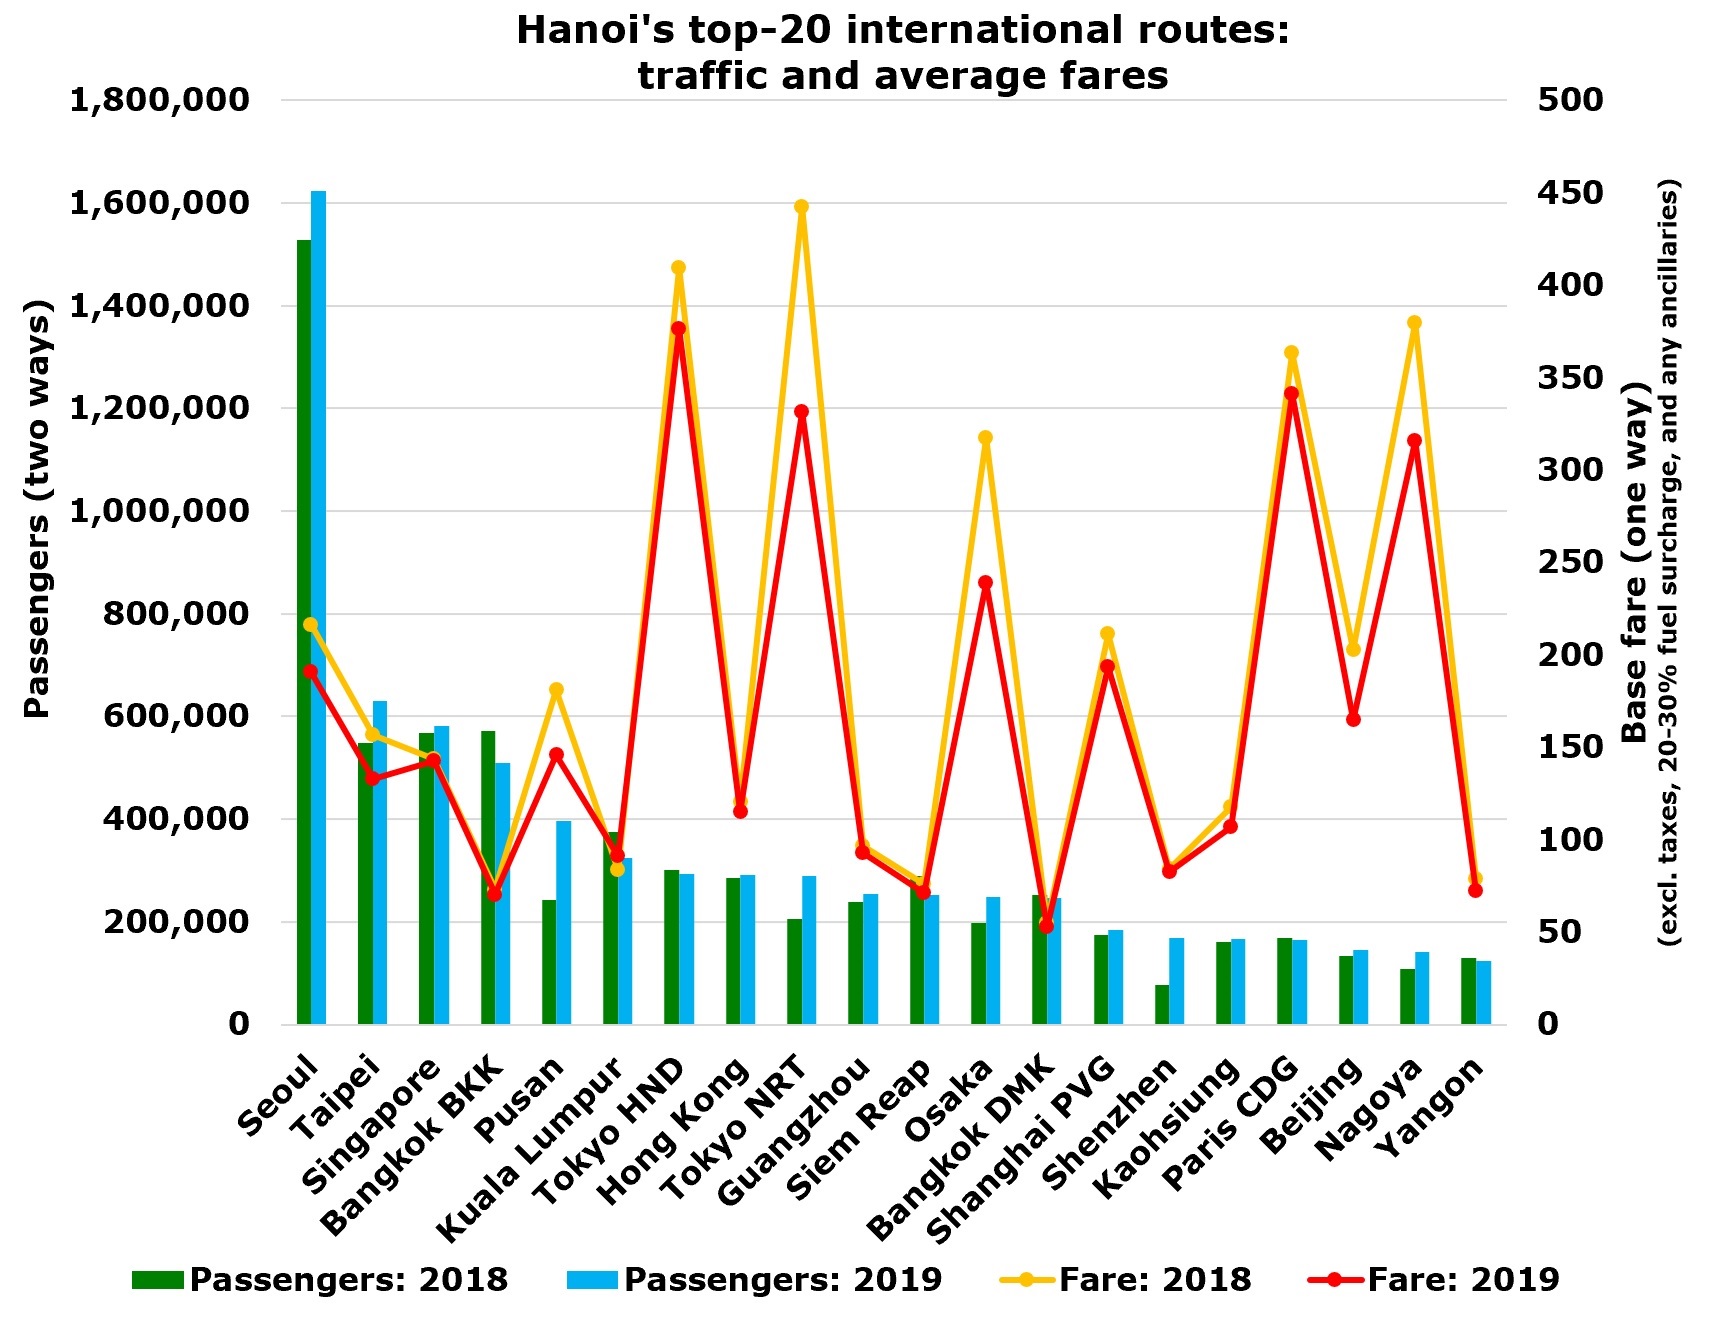 Hanoi's top-20 international routes had 7 million passengers in 2019, up 7% YOY